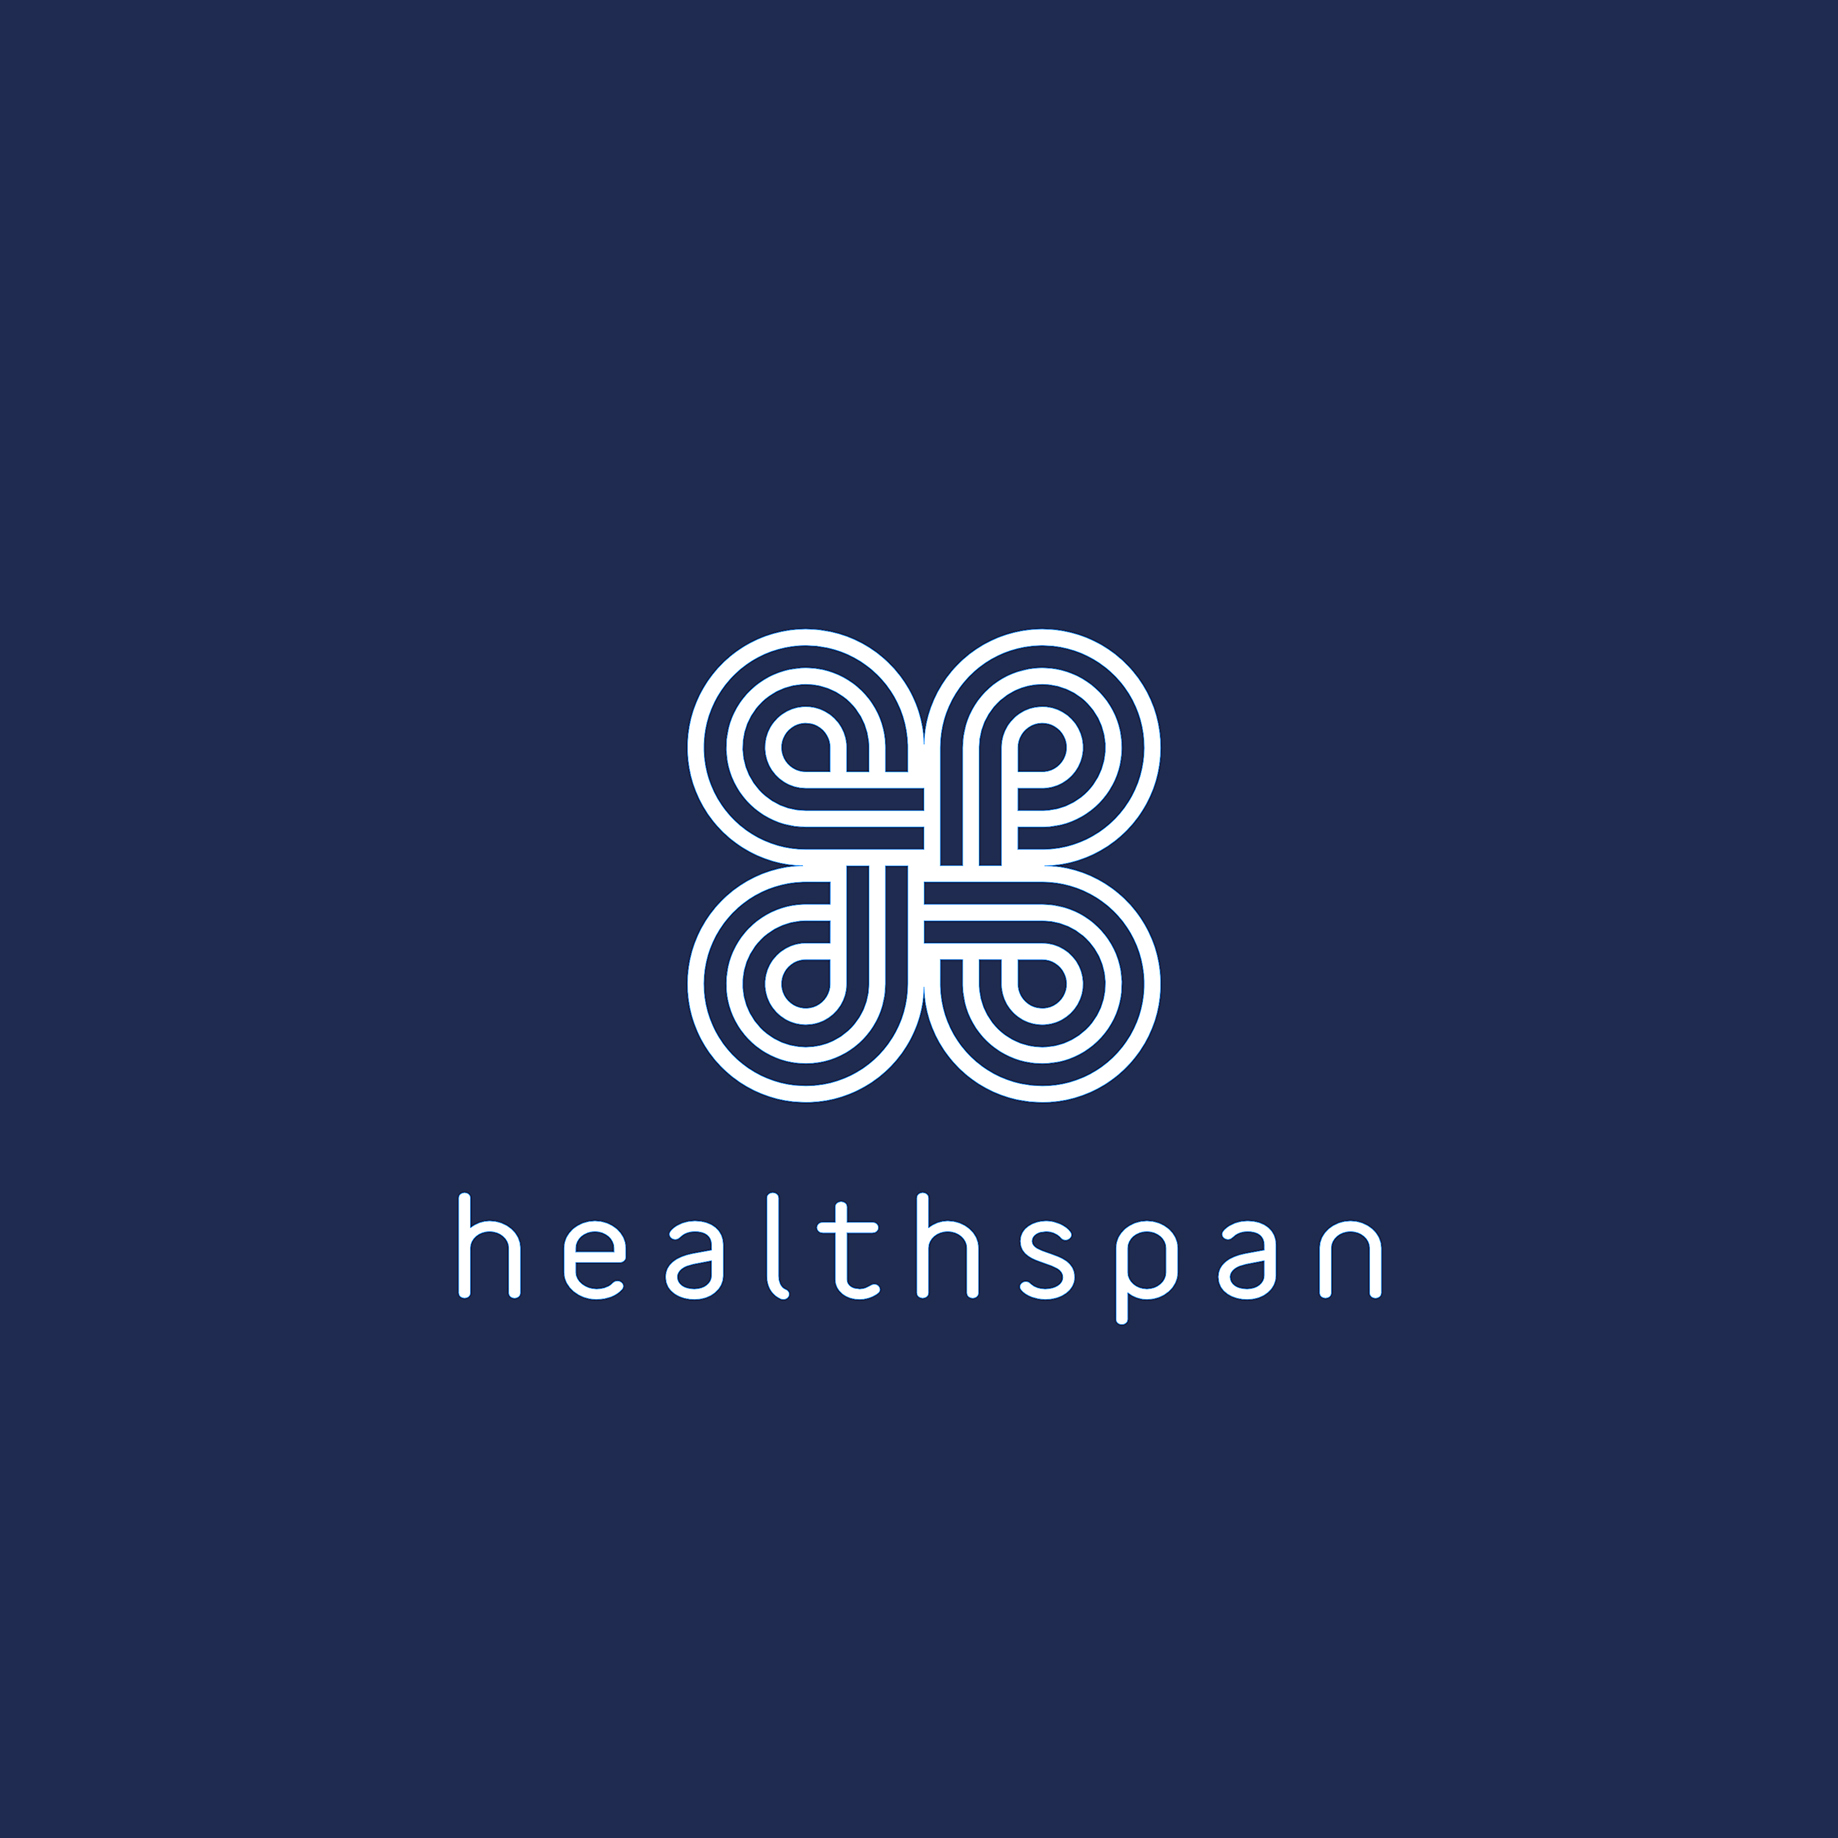 Healthspan